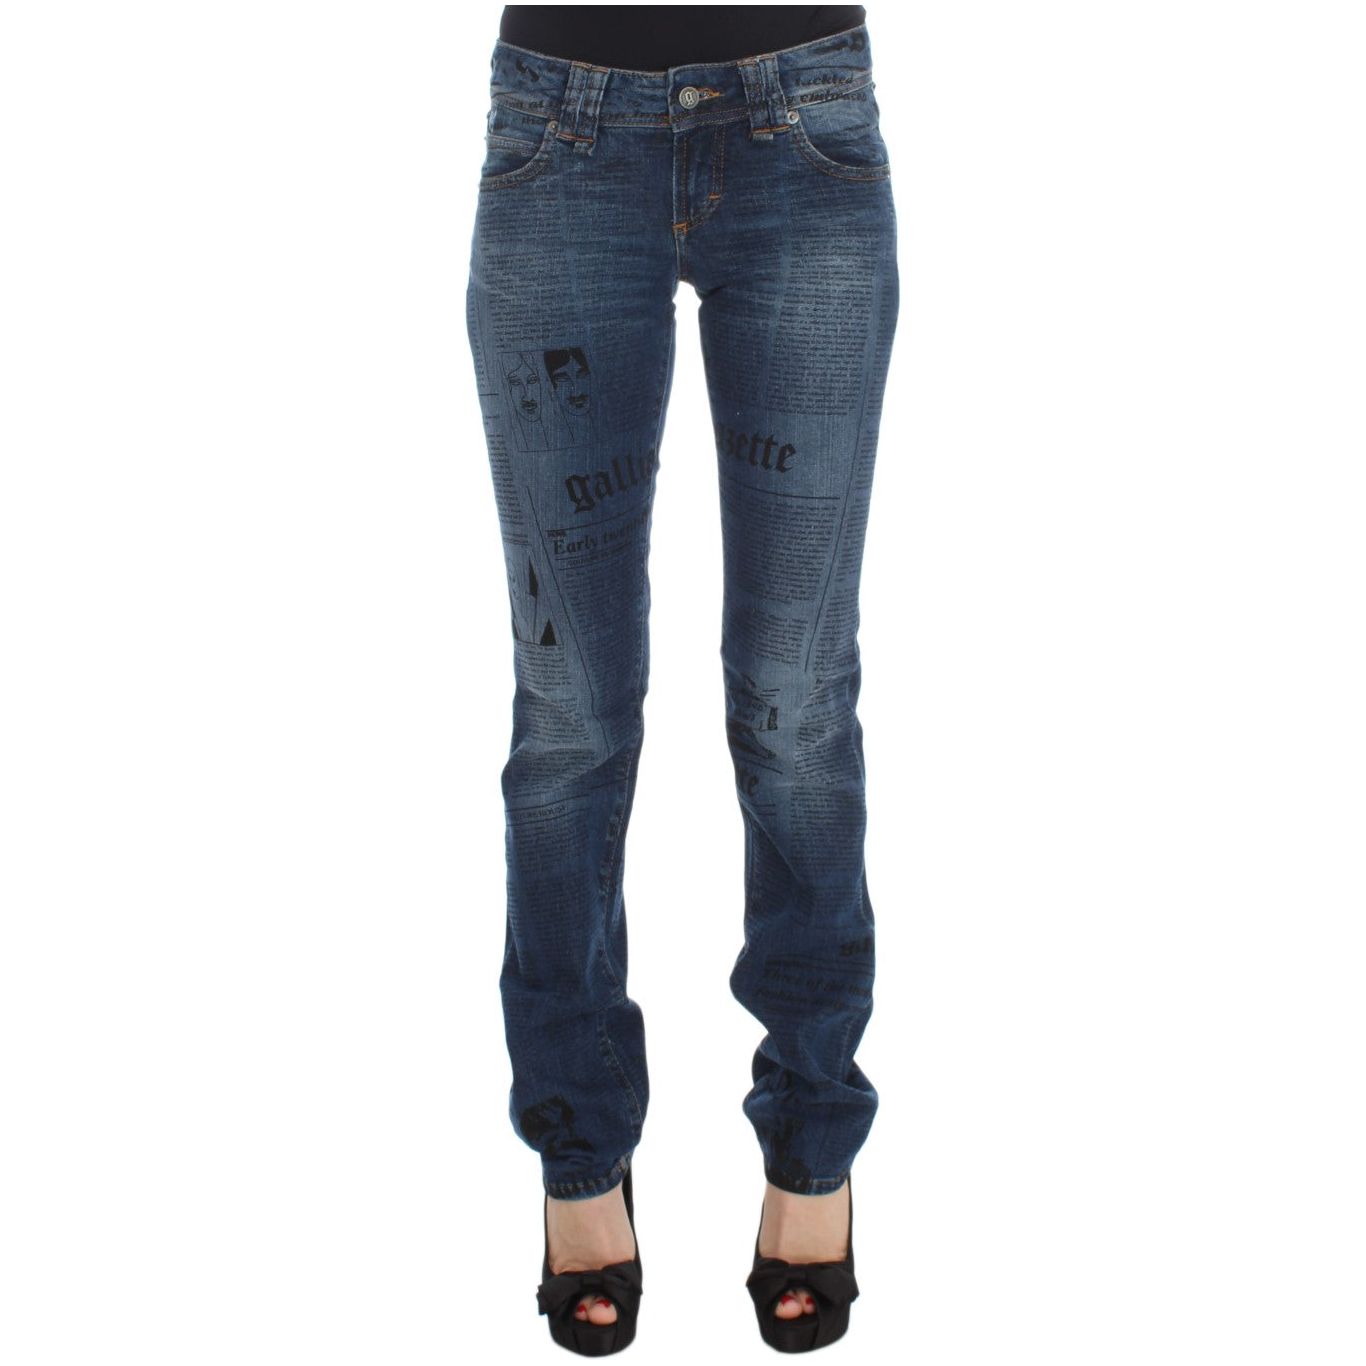 John Galliano Elegant Slim Bootcut Denim Jeans blue-wash-cotton-blend-slim-fit-bootcut-jeans-1 329940-blue-wash-cotton-blend-slim-fit-bootcut-jeans-3.jpg